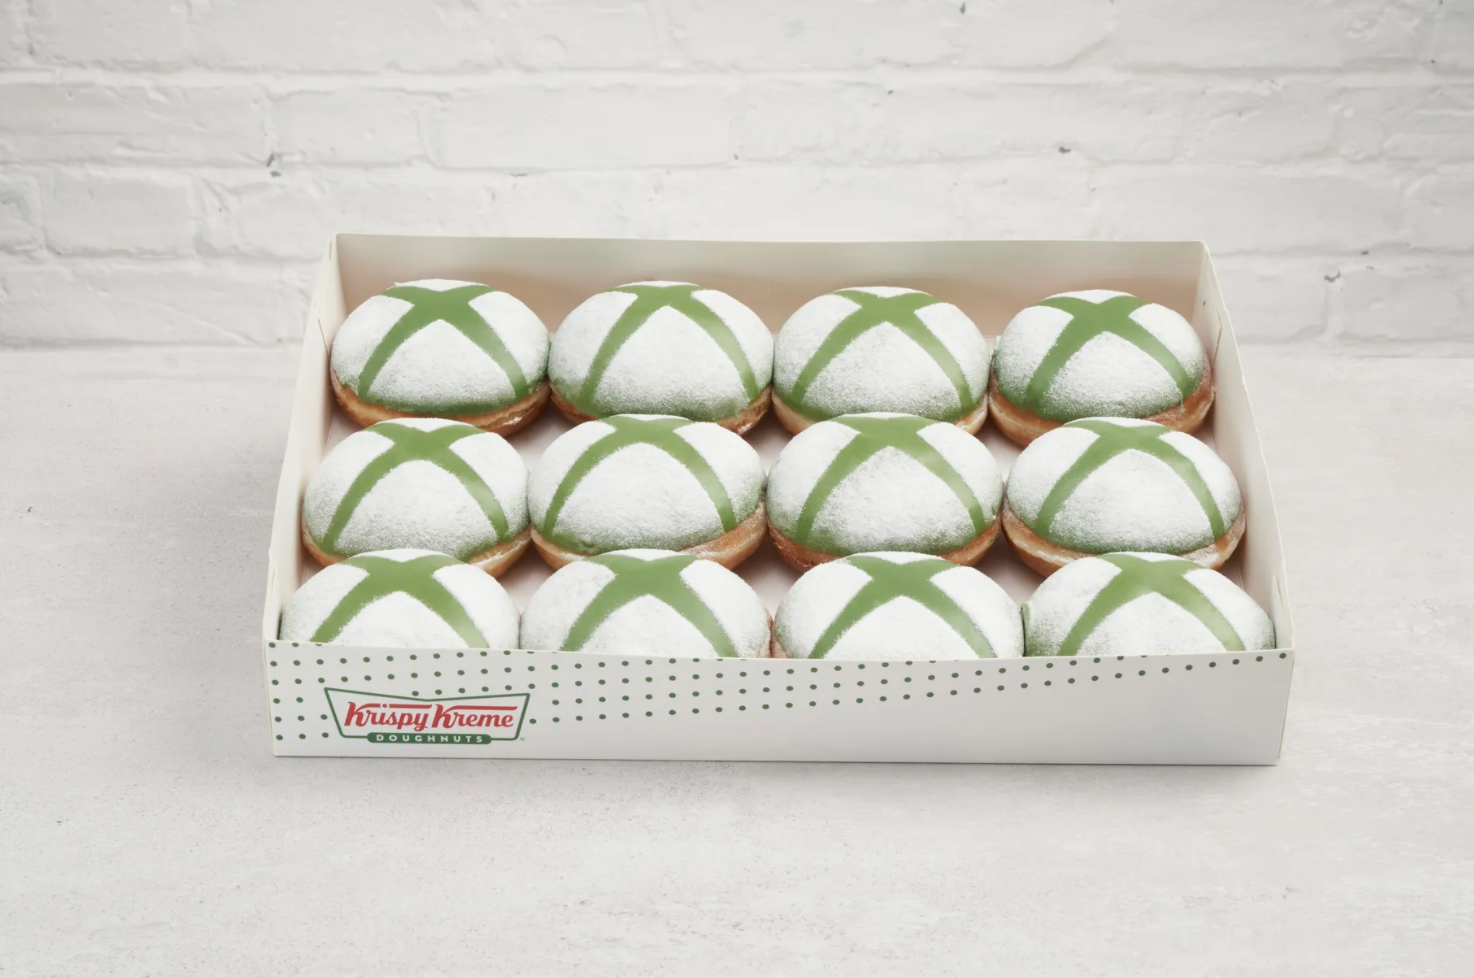 Krispy Kreme Teams Up With Microsoft For Xbox-Themed Doughnut